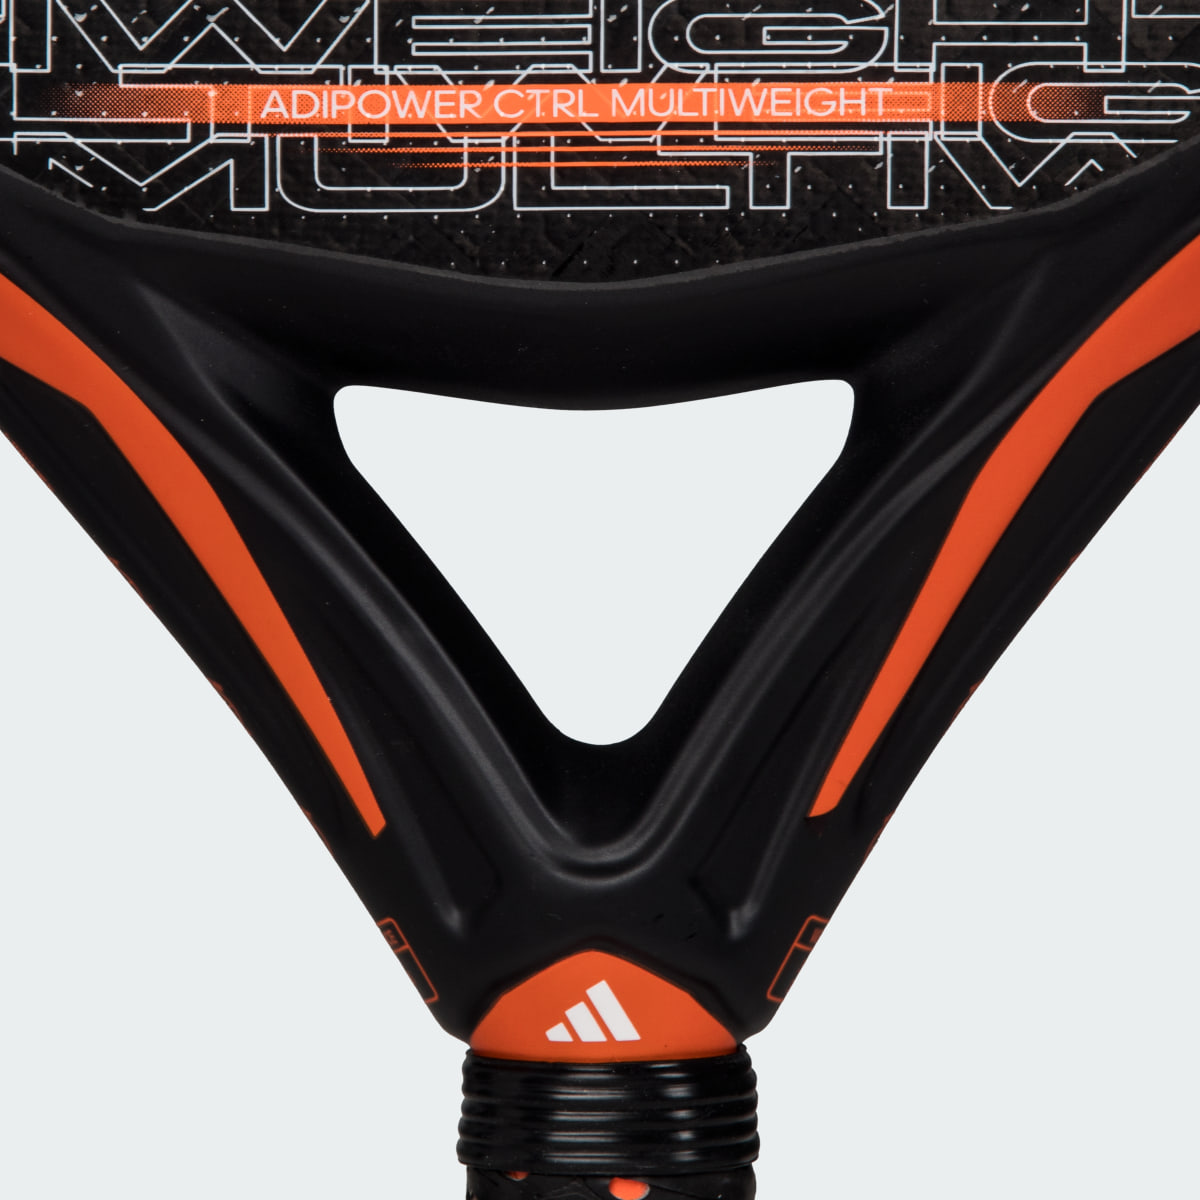 Adidas Adipower Multiweight CTRL 3.3 Padel Racket. 6